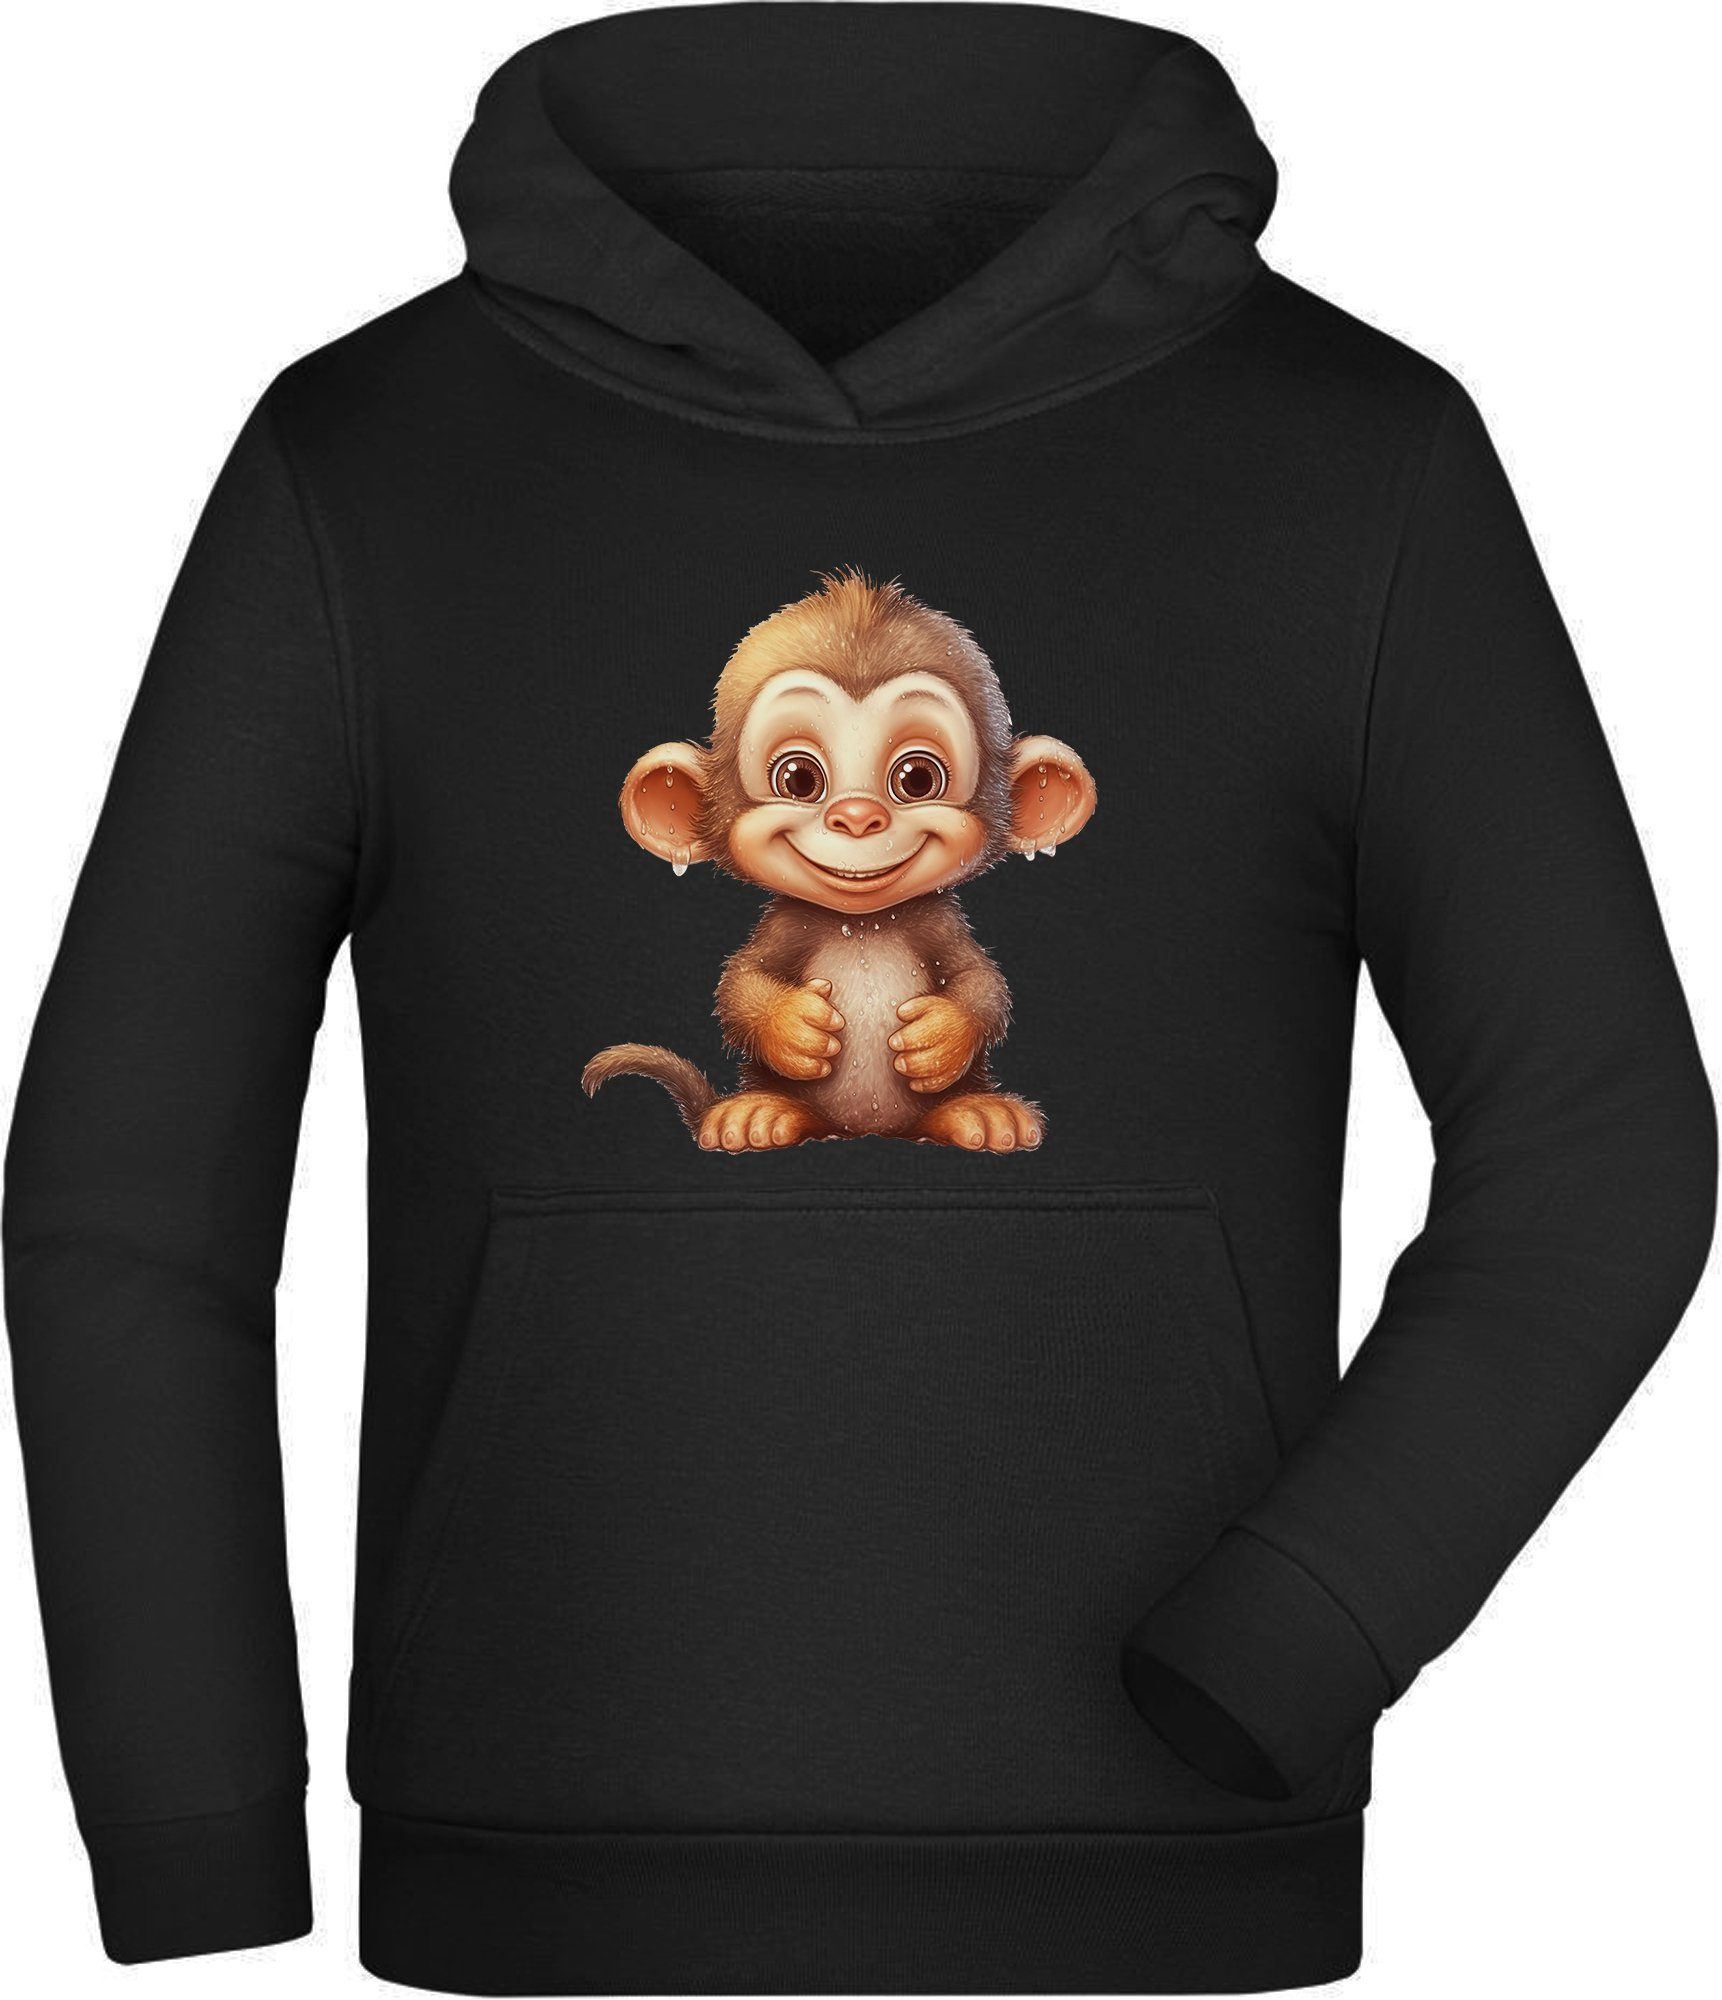 MyDesign24 Hoodie Kinder Kapuzen Sweatshirt Baby Affe Schimpanse - Kinder Hoodie i263, Kapuzensweater mit Aufdruck